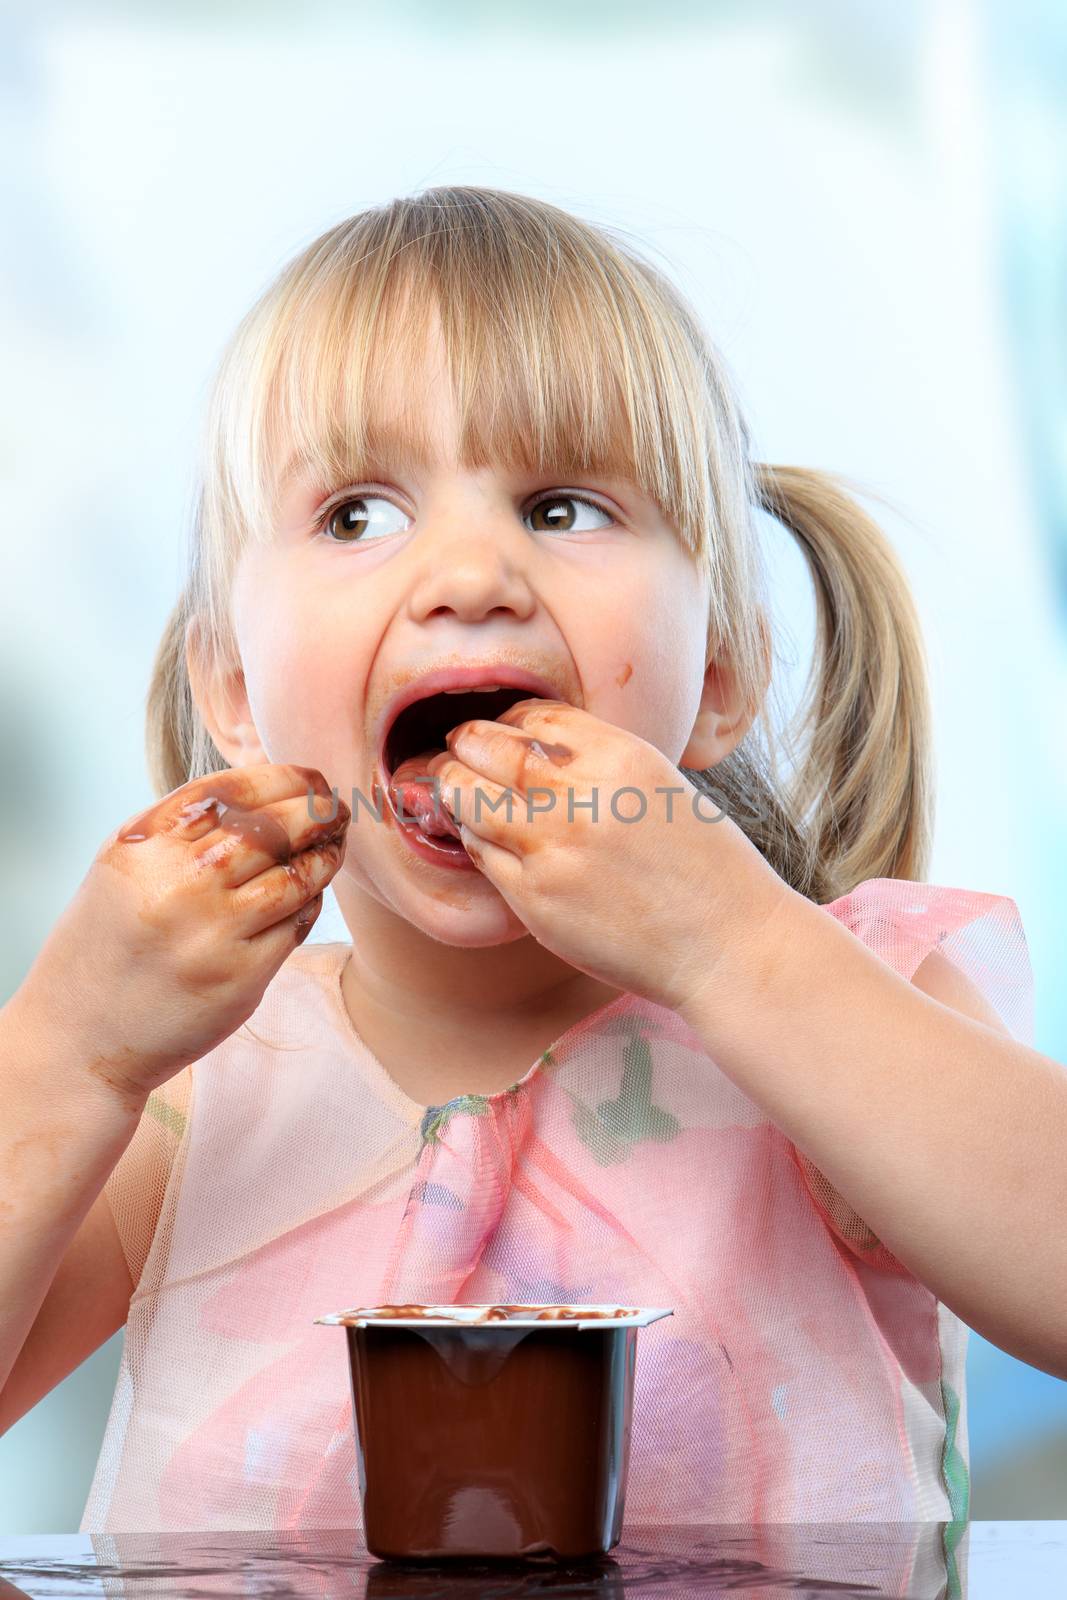 Cute girl eating chocolate yogurt with hands. by karelnoppe